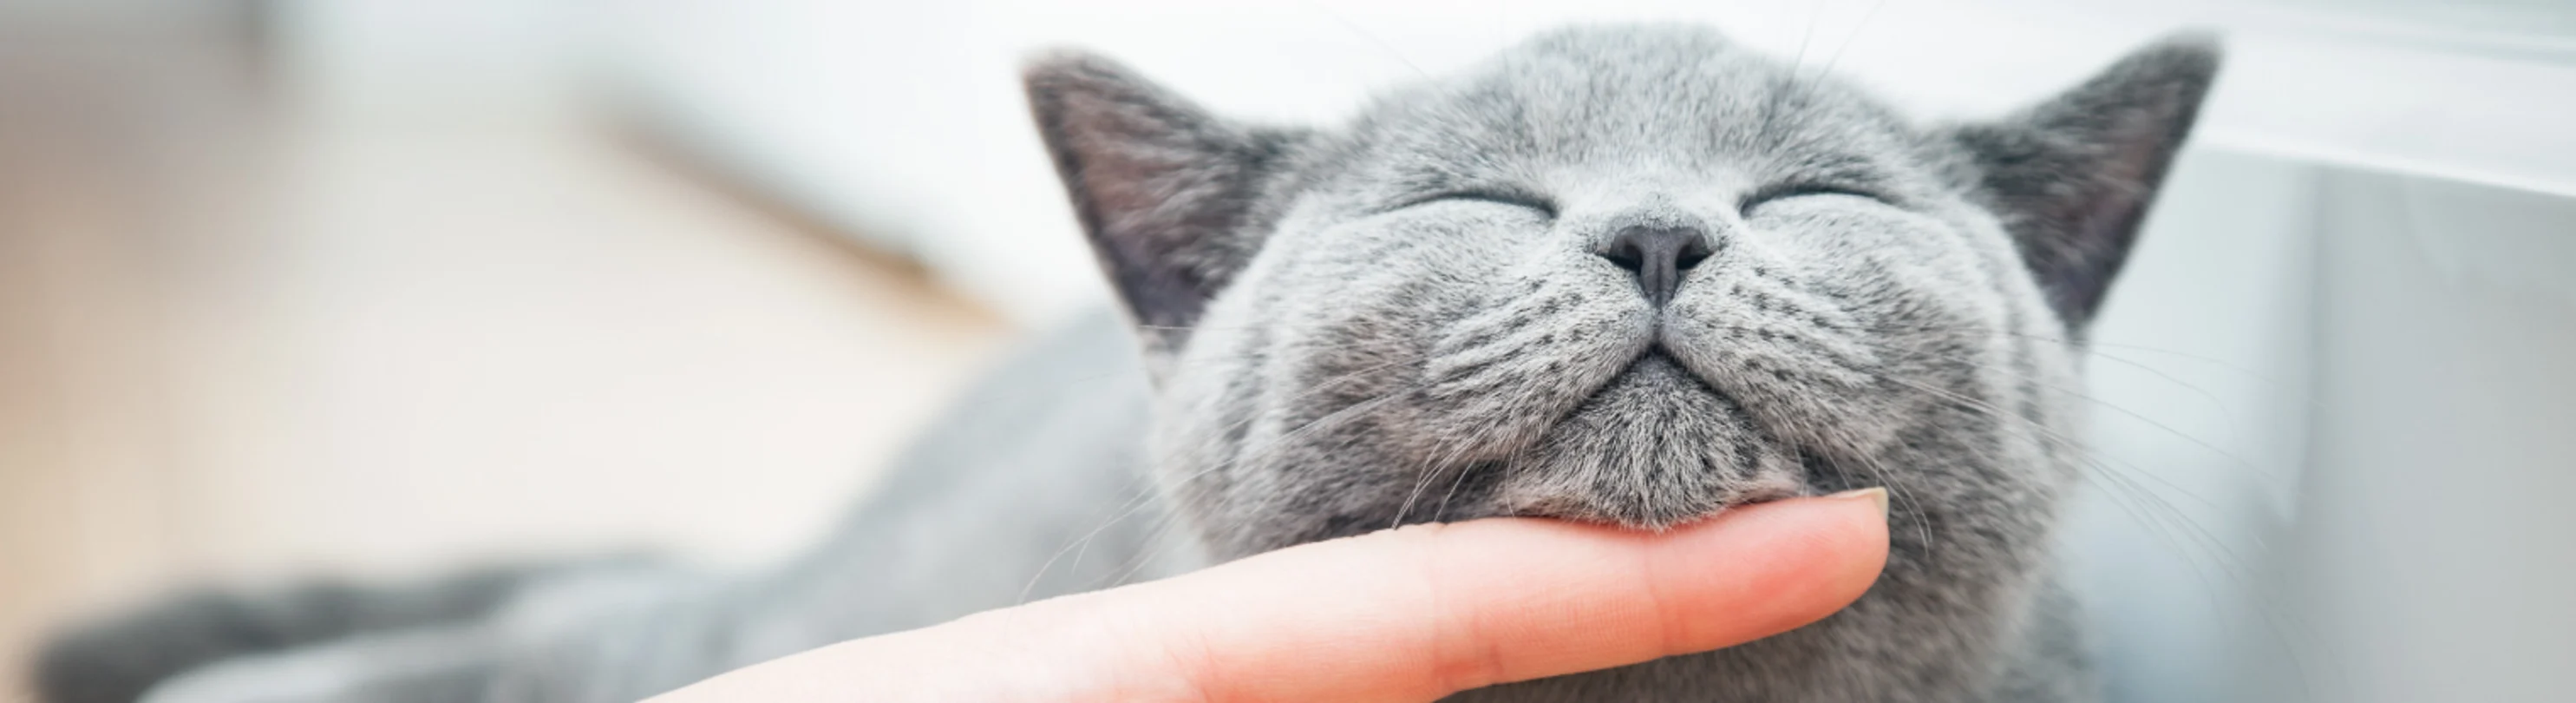 Gray cat chin scratch